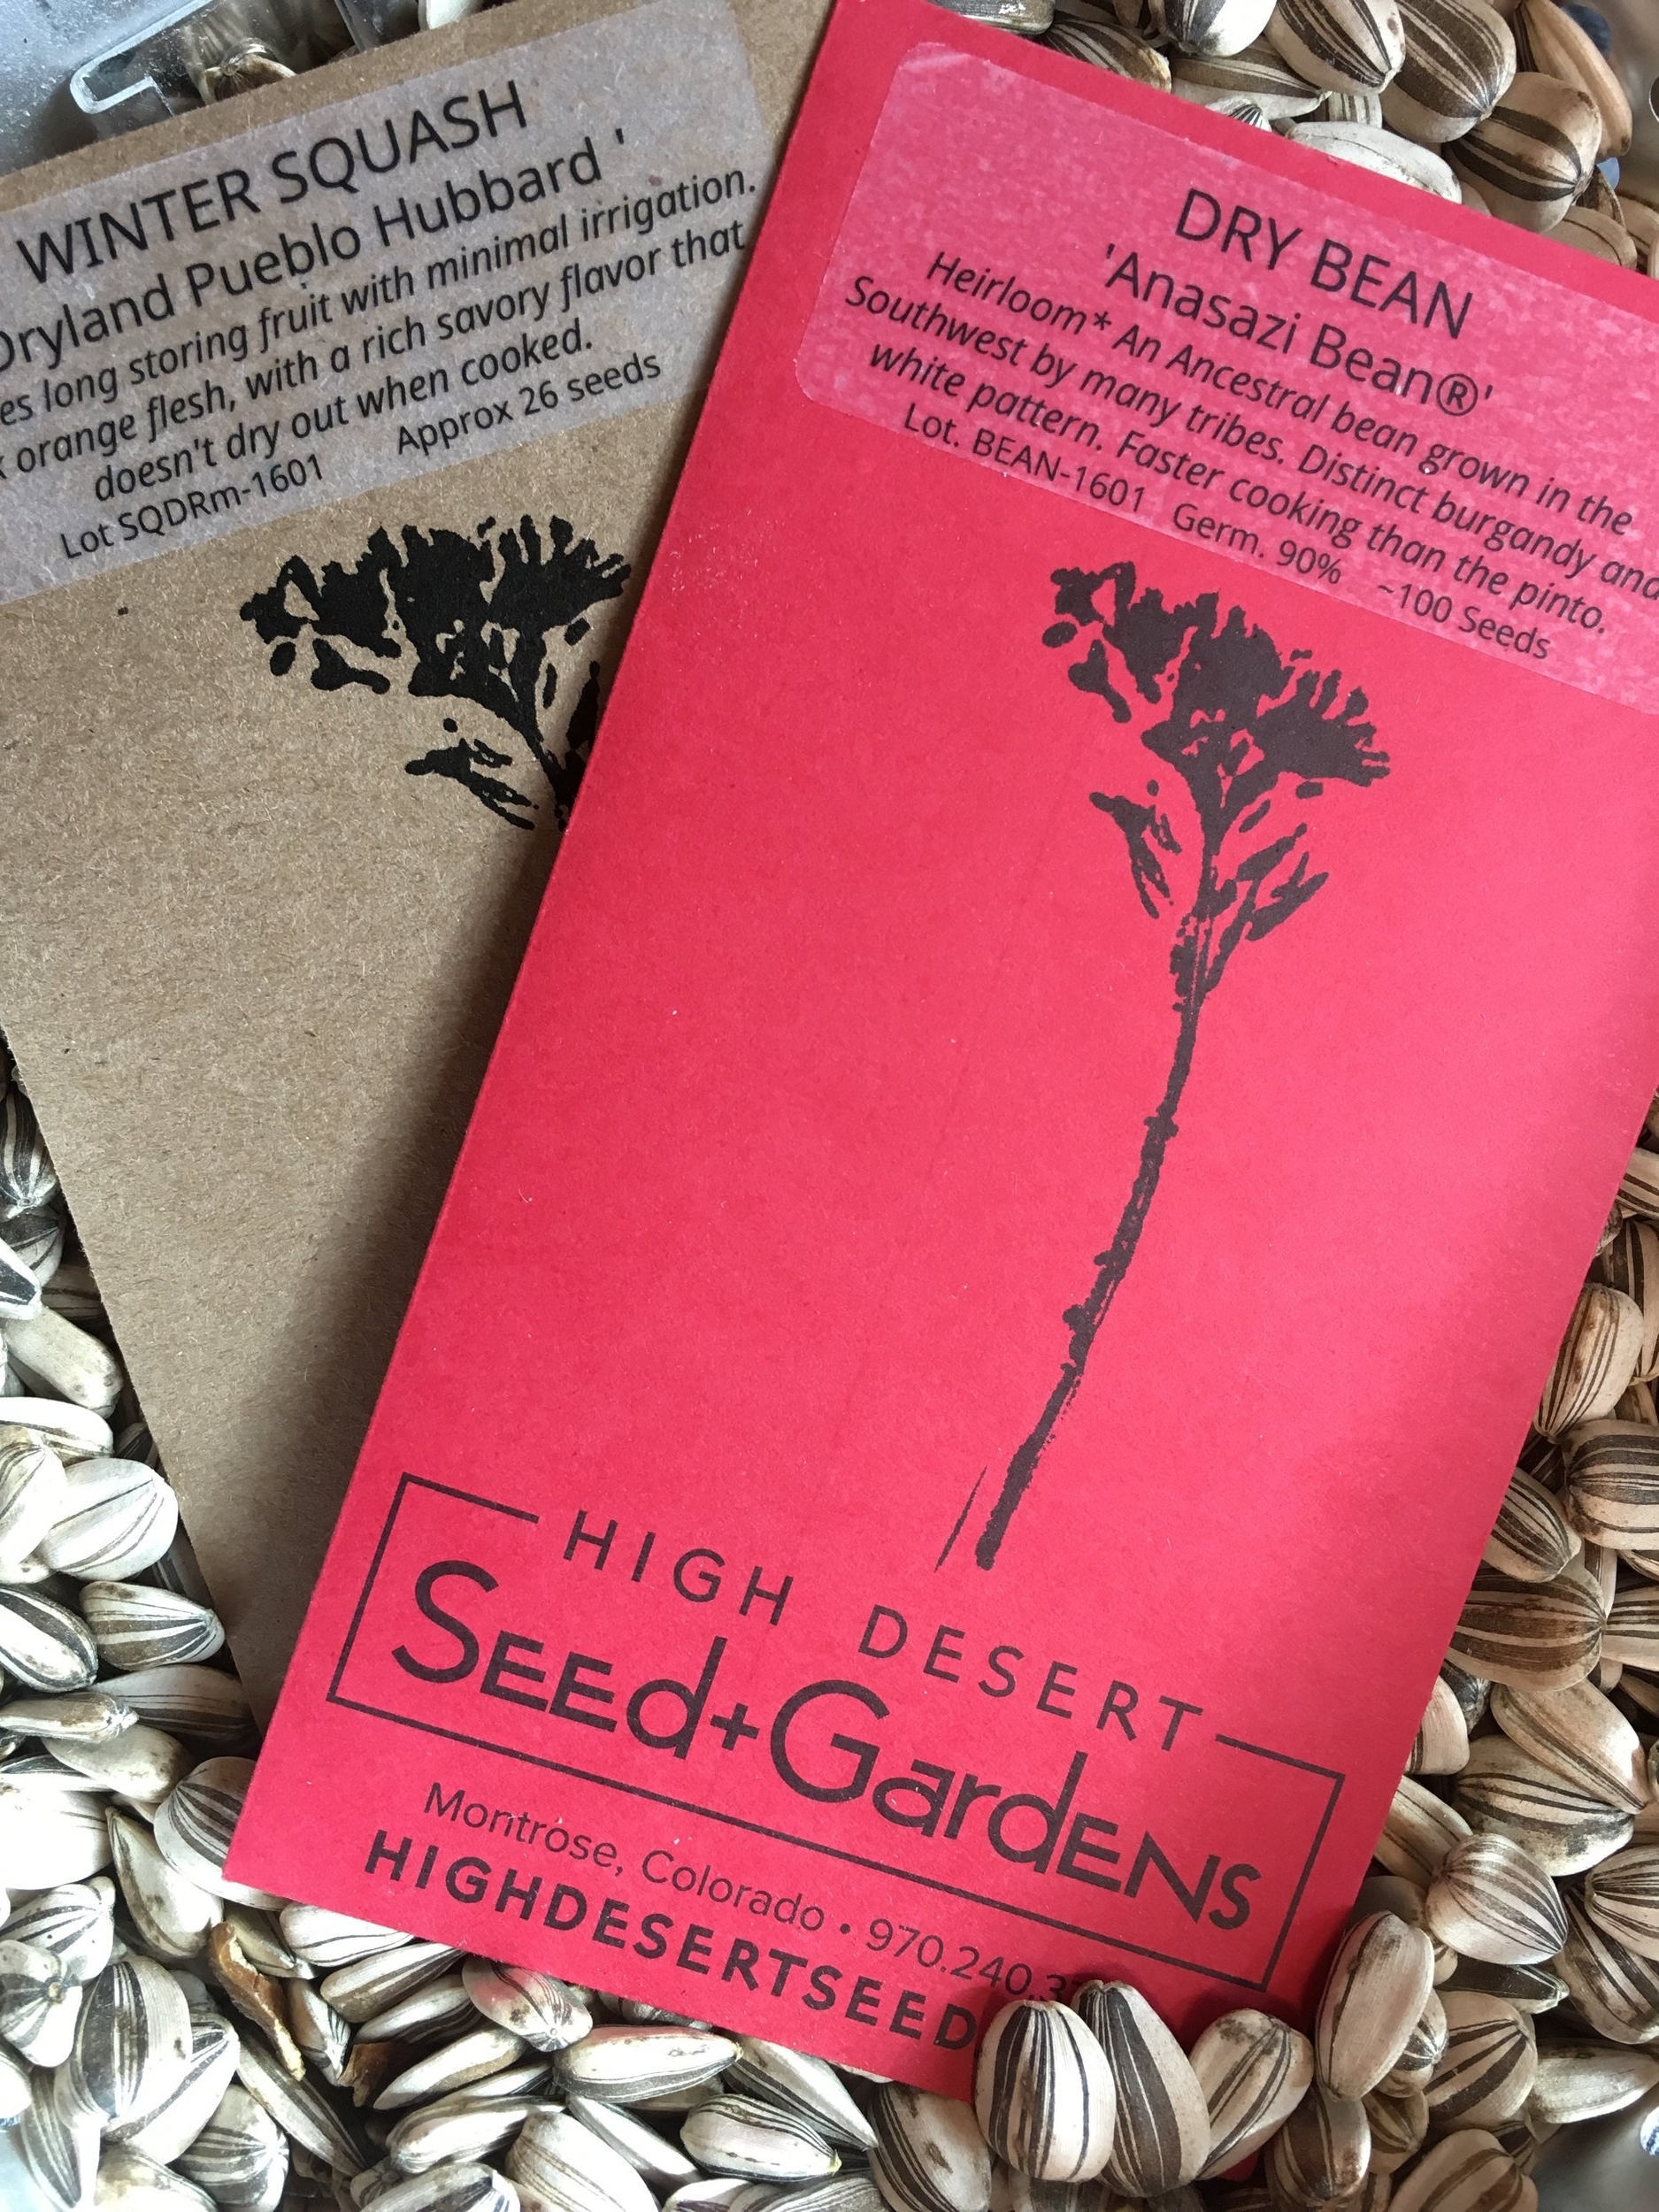 High Desert Seed Gardens